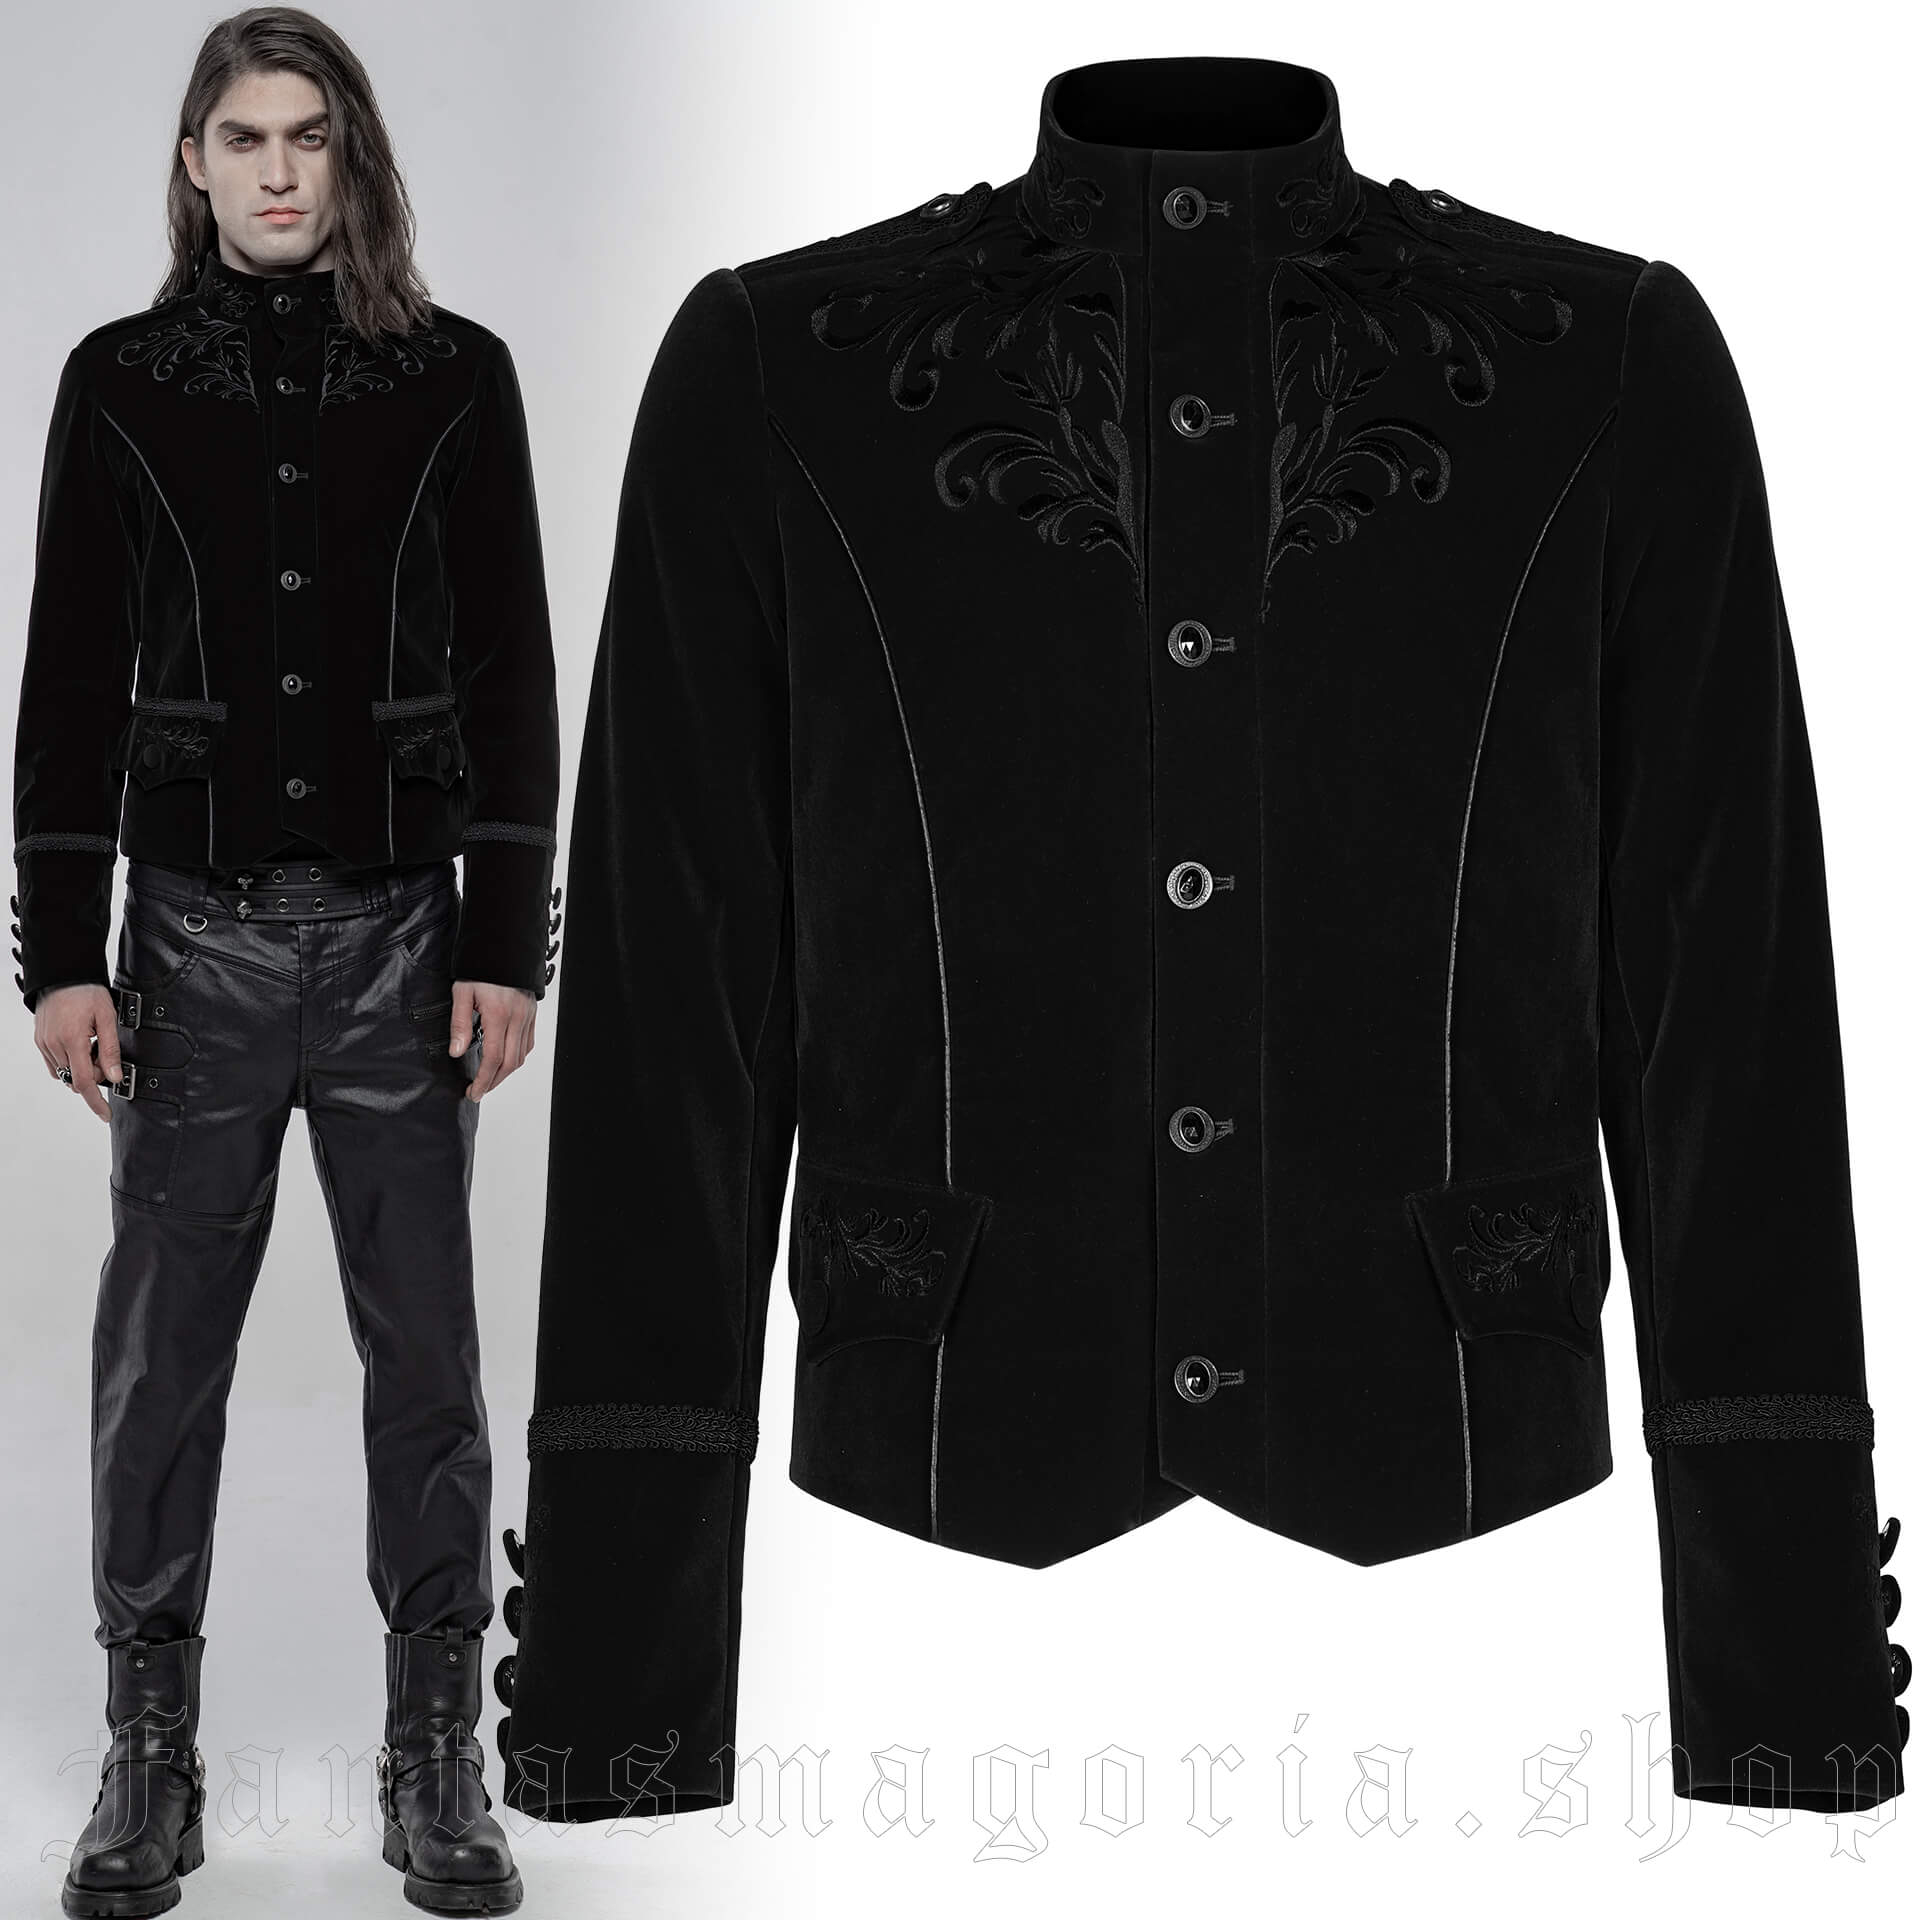 Hamlet Black Jacket WY-1269/BK by PUNK RAVE brand